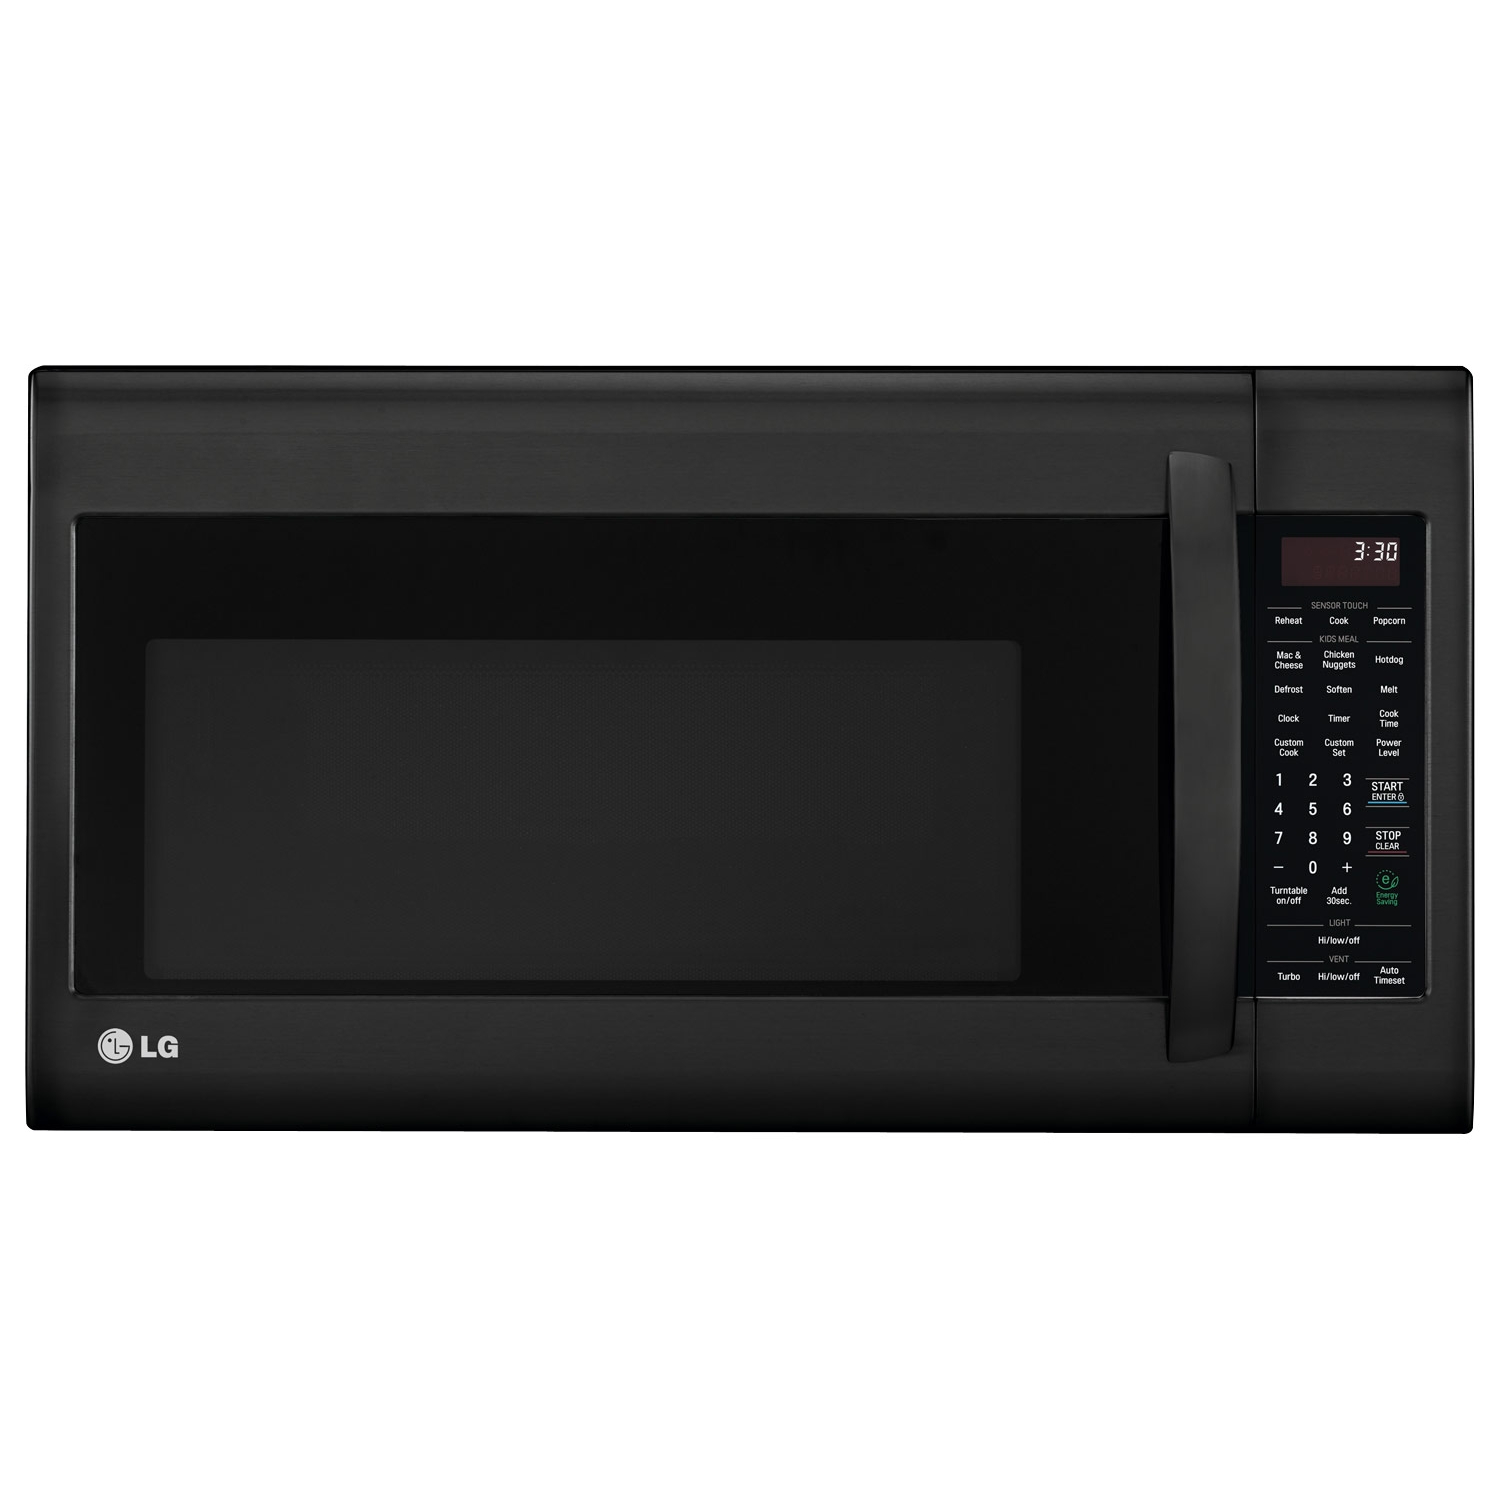 Buy LG Microwave LMV2031SB